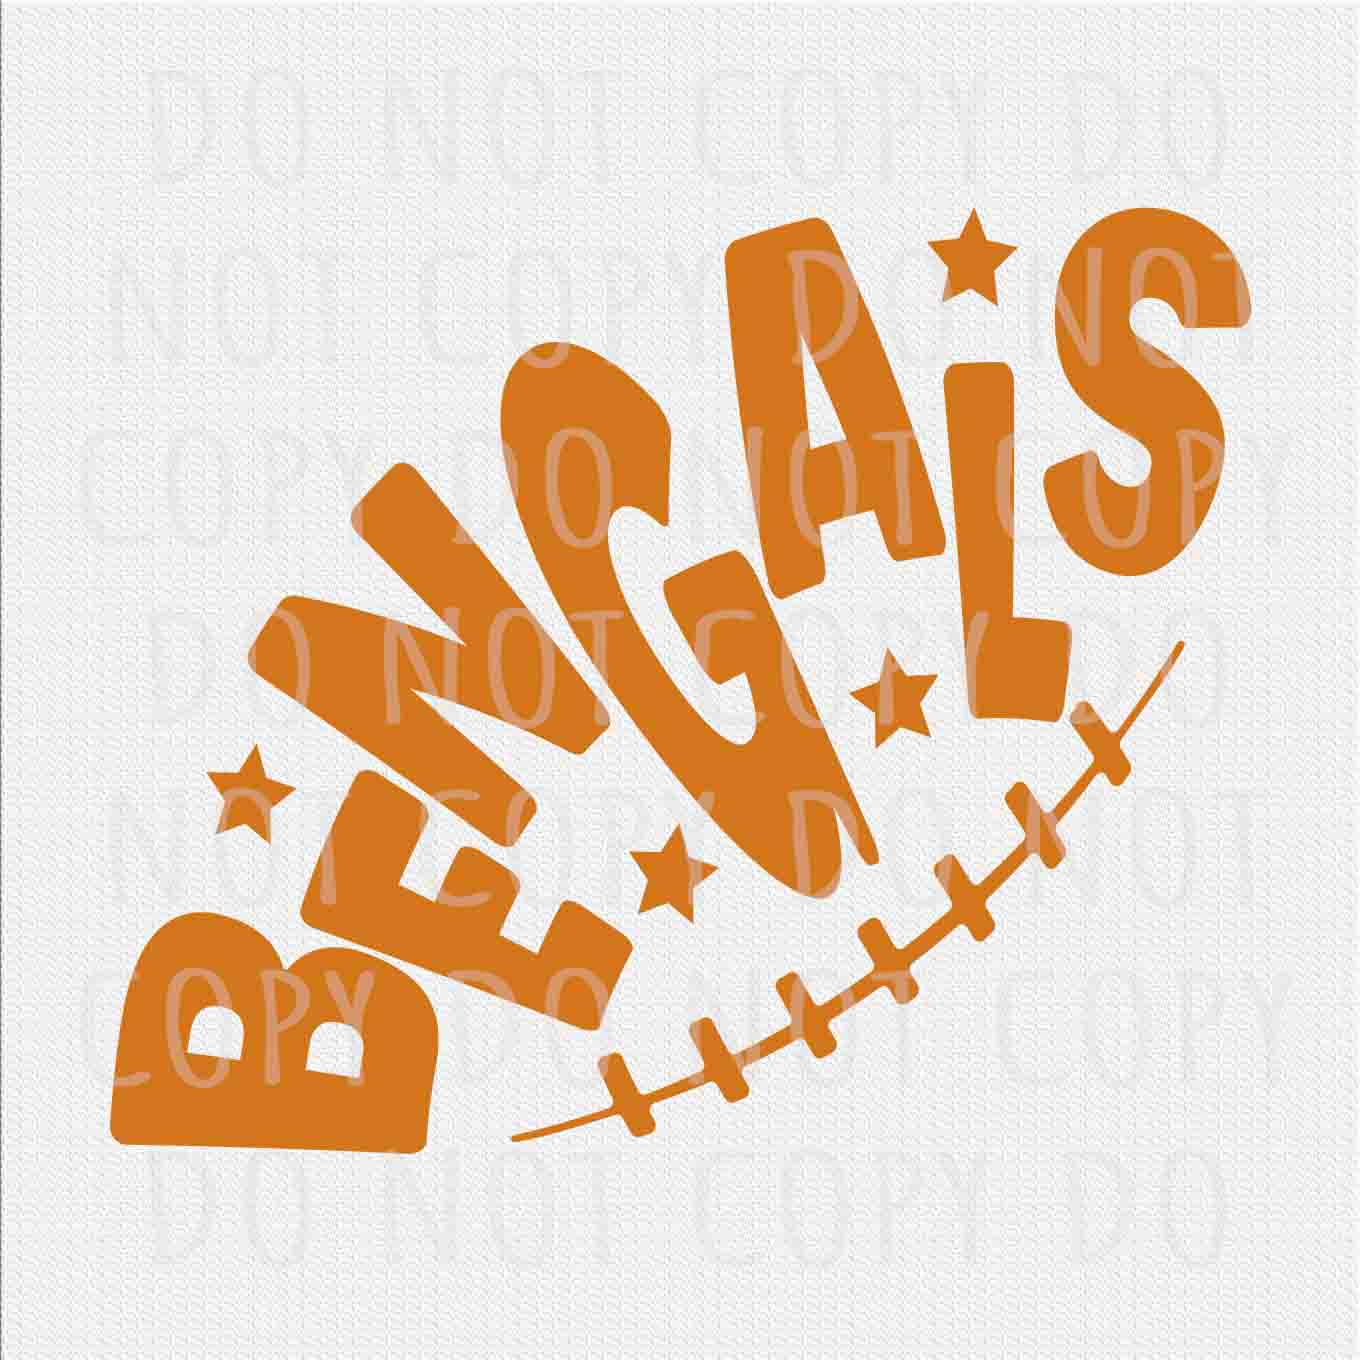 Bengals team png, Retro Bengals Orange Vintage Letters football design png, Sublimation design png